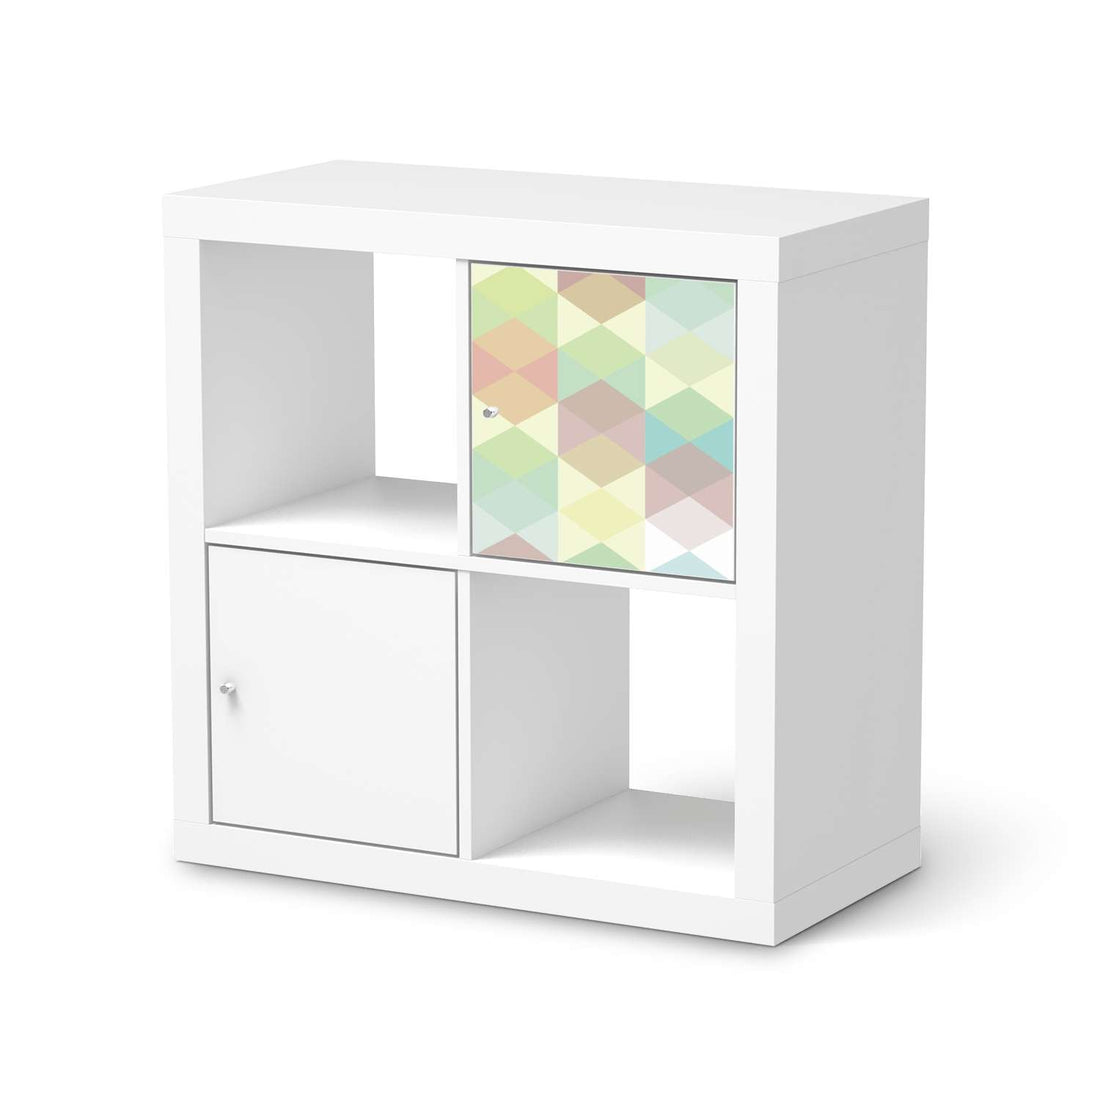 Selbstklebende Folie Melitta Pastell Geometrie - IKEA Kallax Regal 1 Türe  - weiss